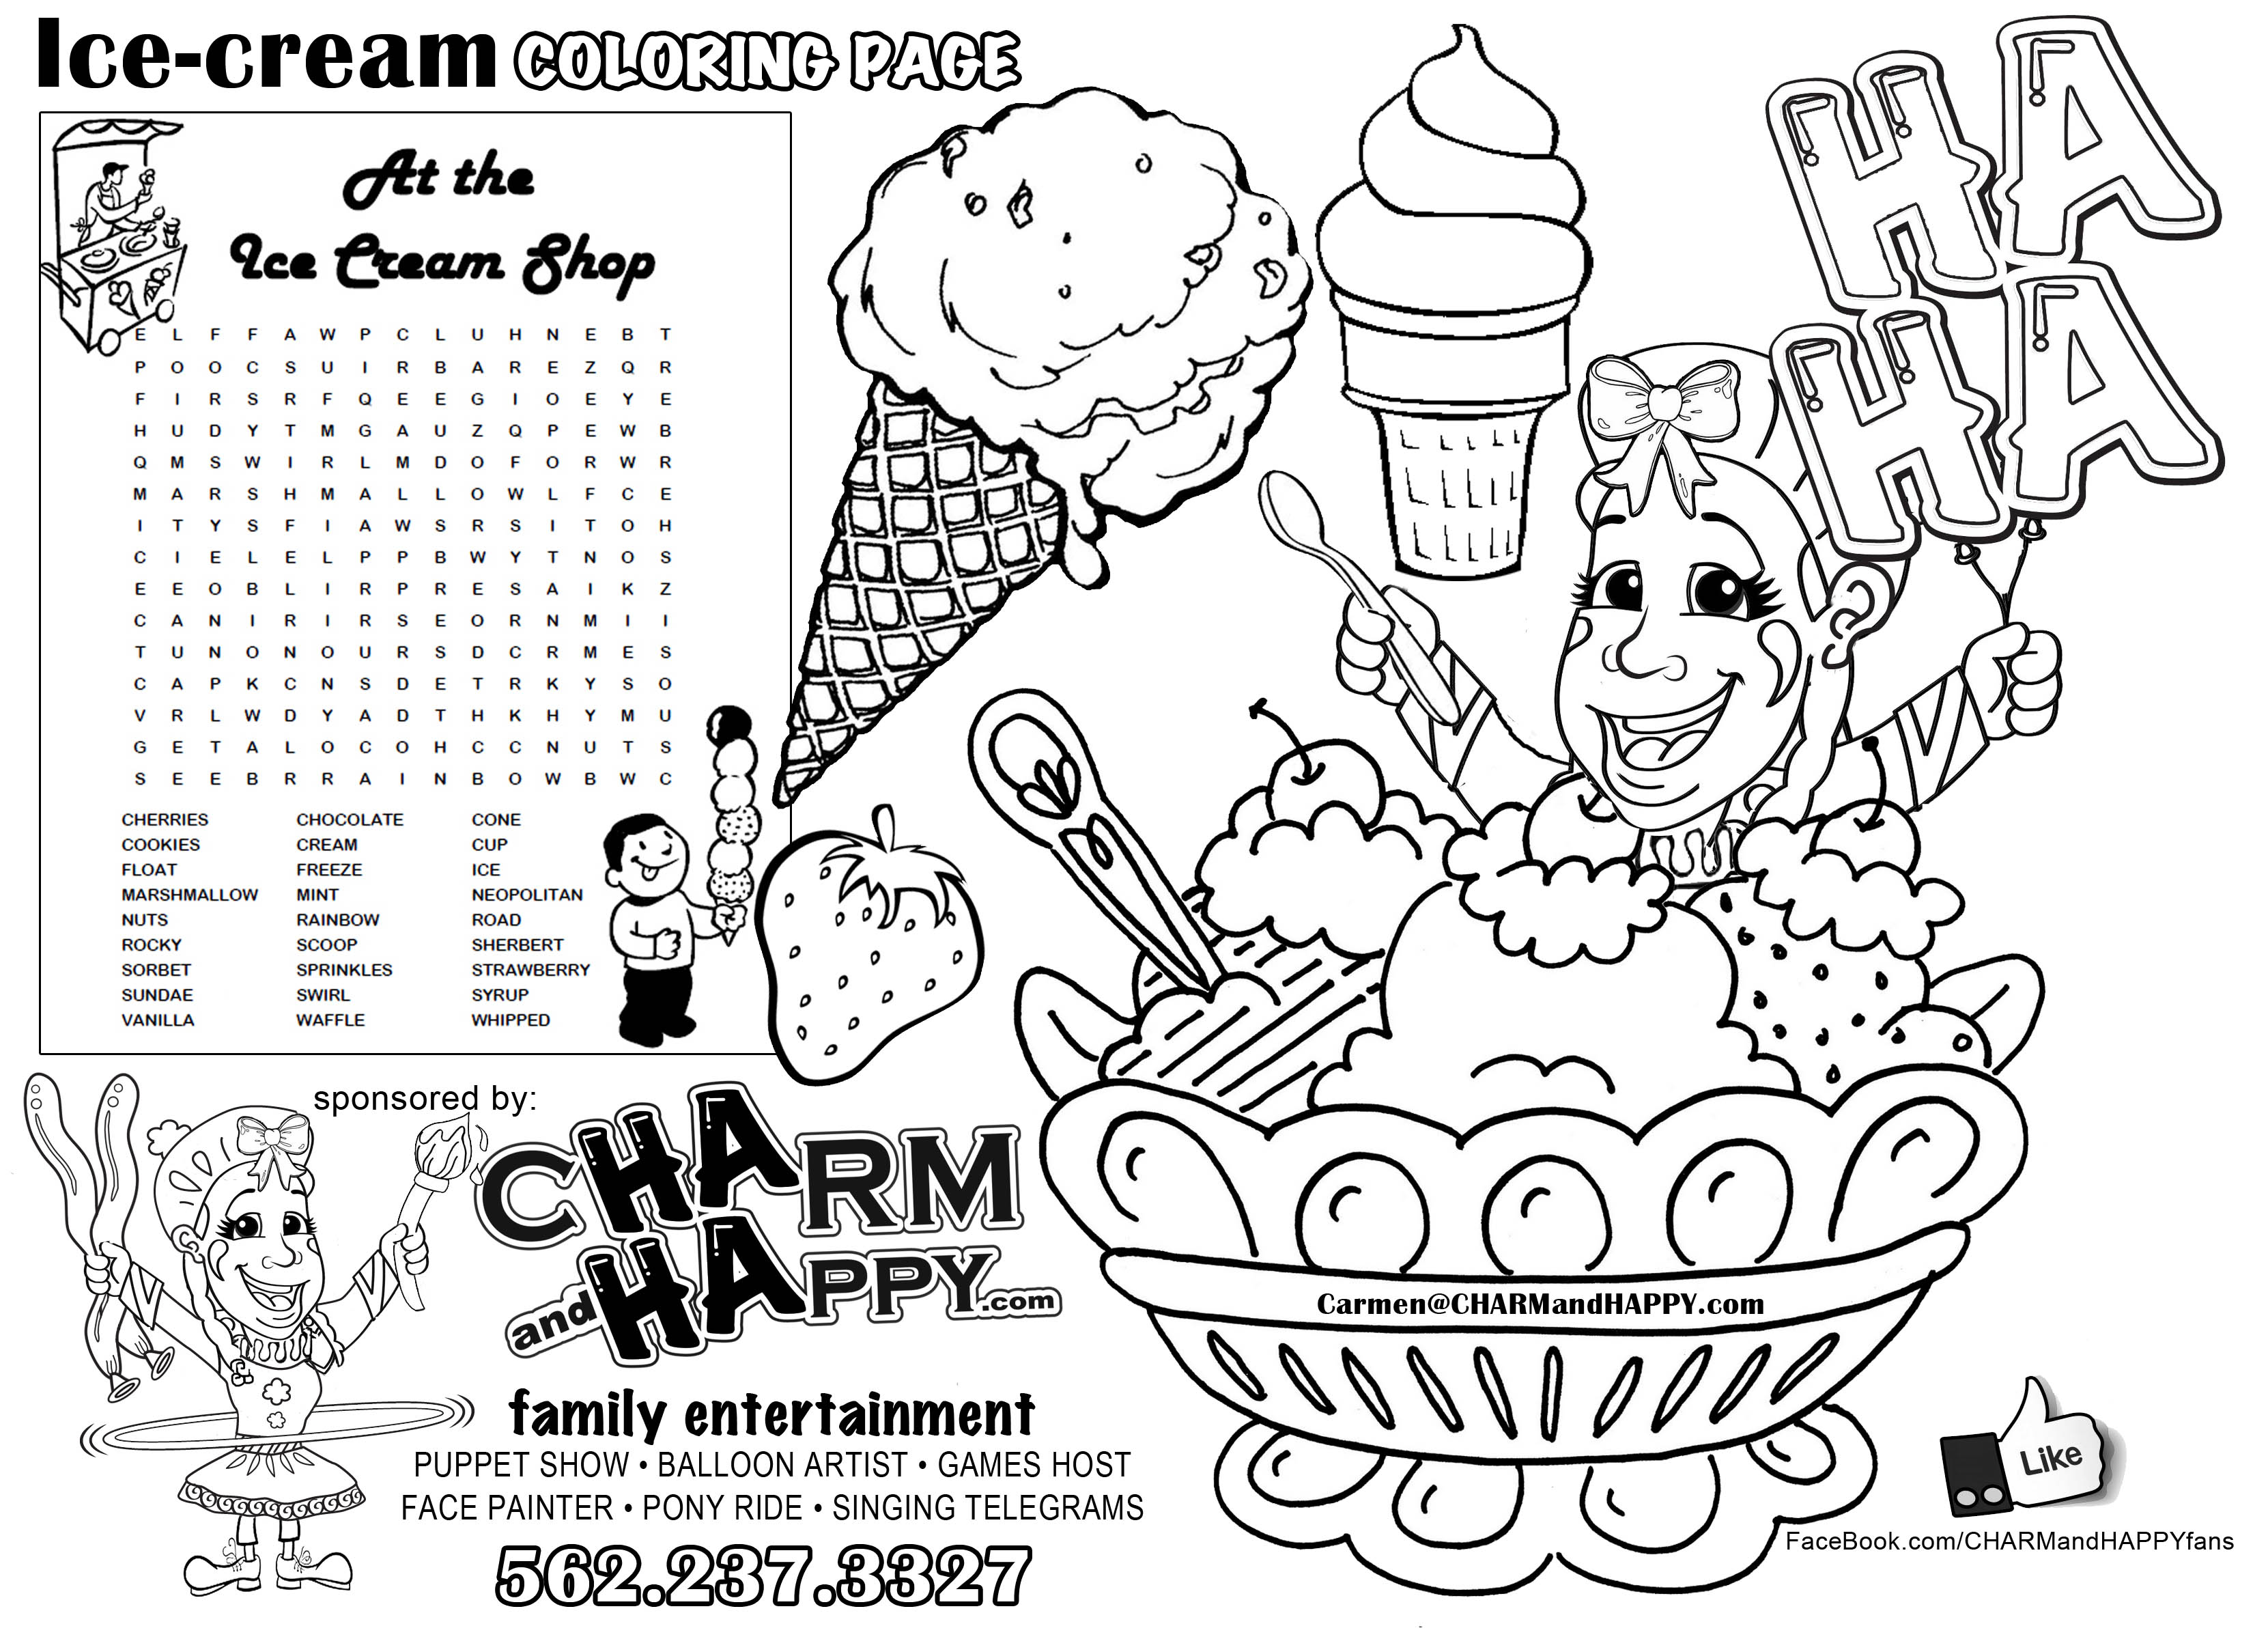 National Ice-cream month July event socials featuring CharmandHappy.com face painting balloon art entertainment Los Angeles Hollywood Temecula moreno valley San Jacinto San Bernardino